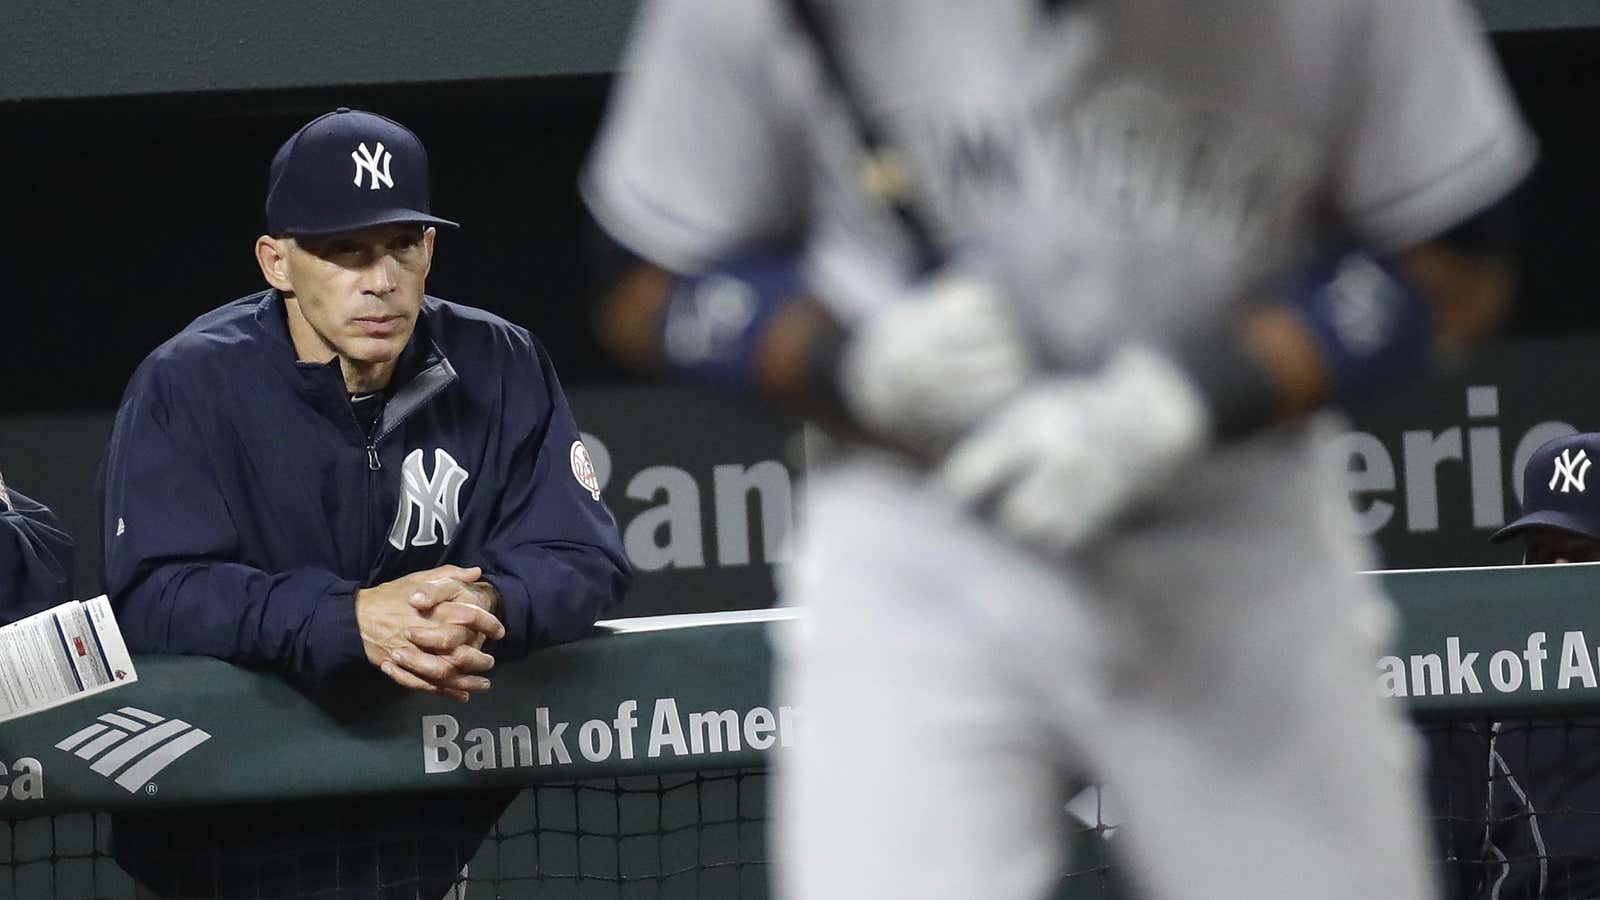 He’s out: New York Yankees manager Joe Girardi